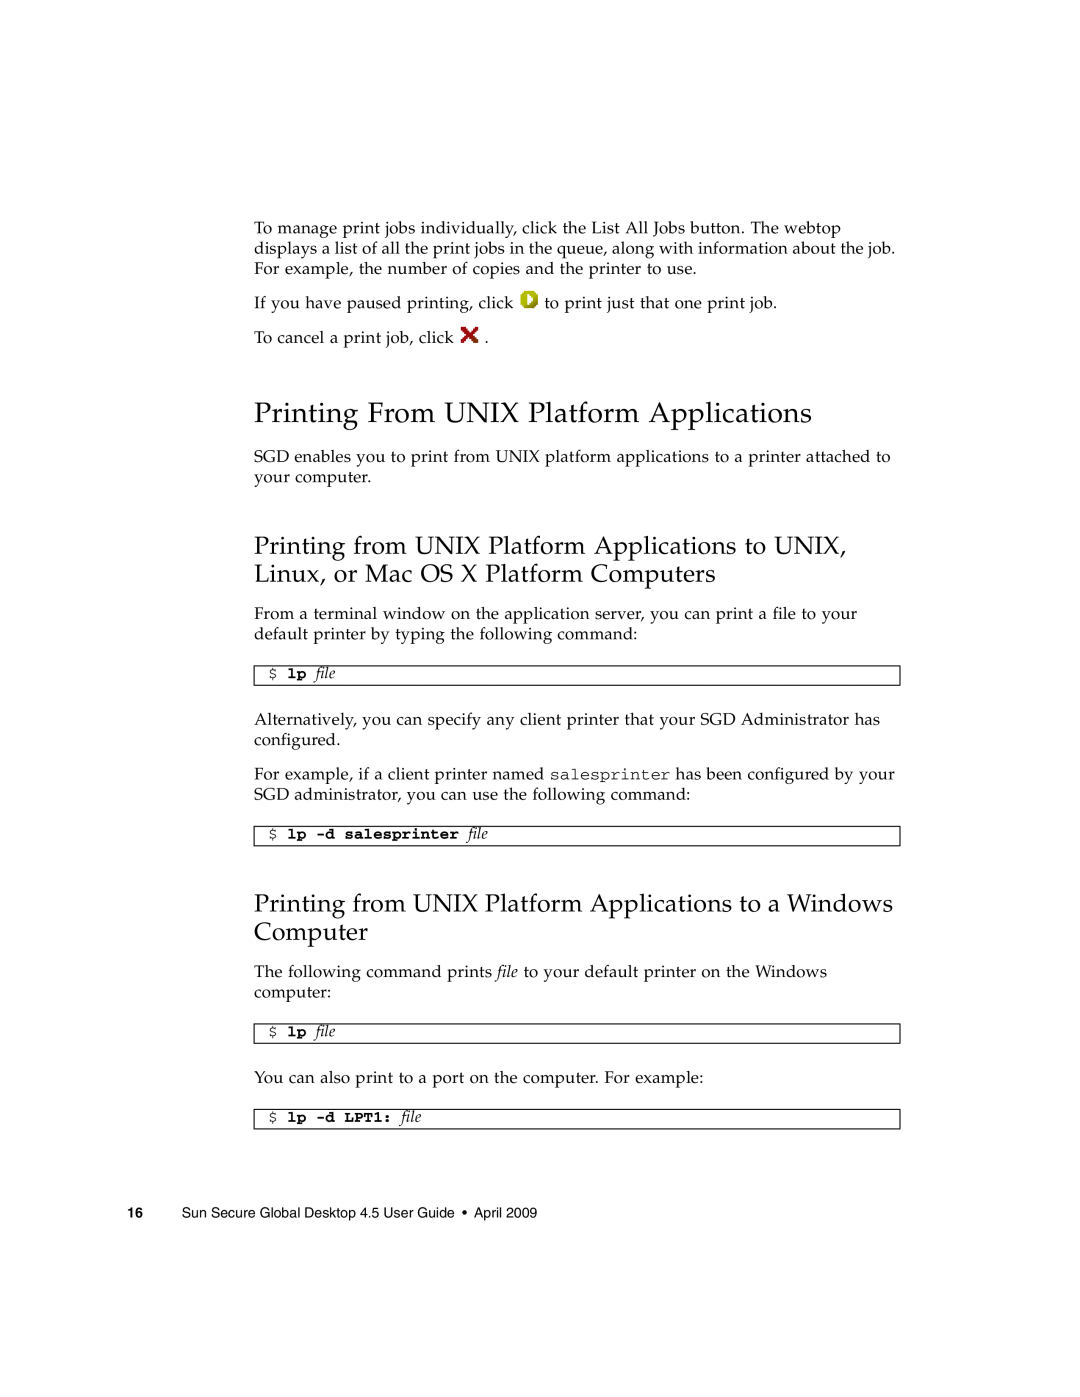 Sun Microsystems 4.5 manual Printing From UNIX Platform Applications 